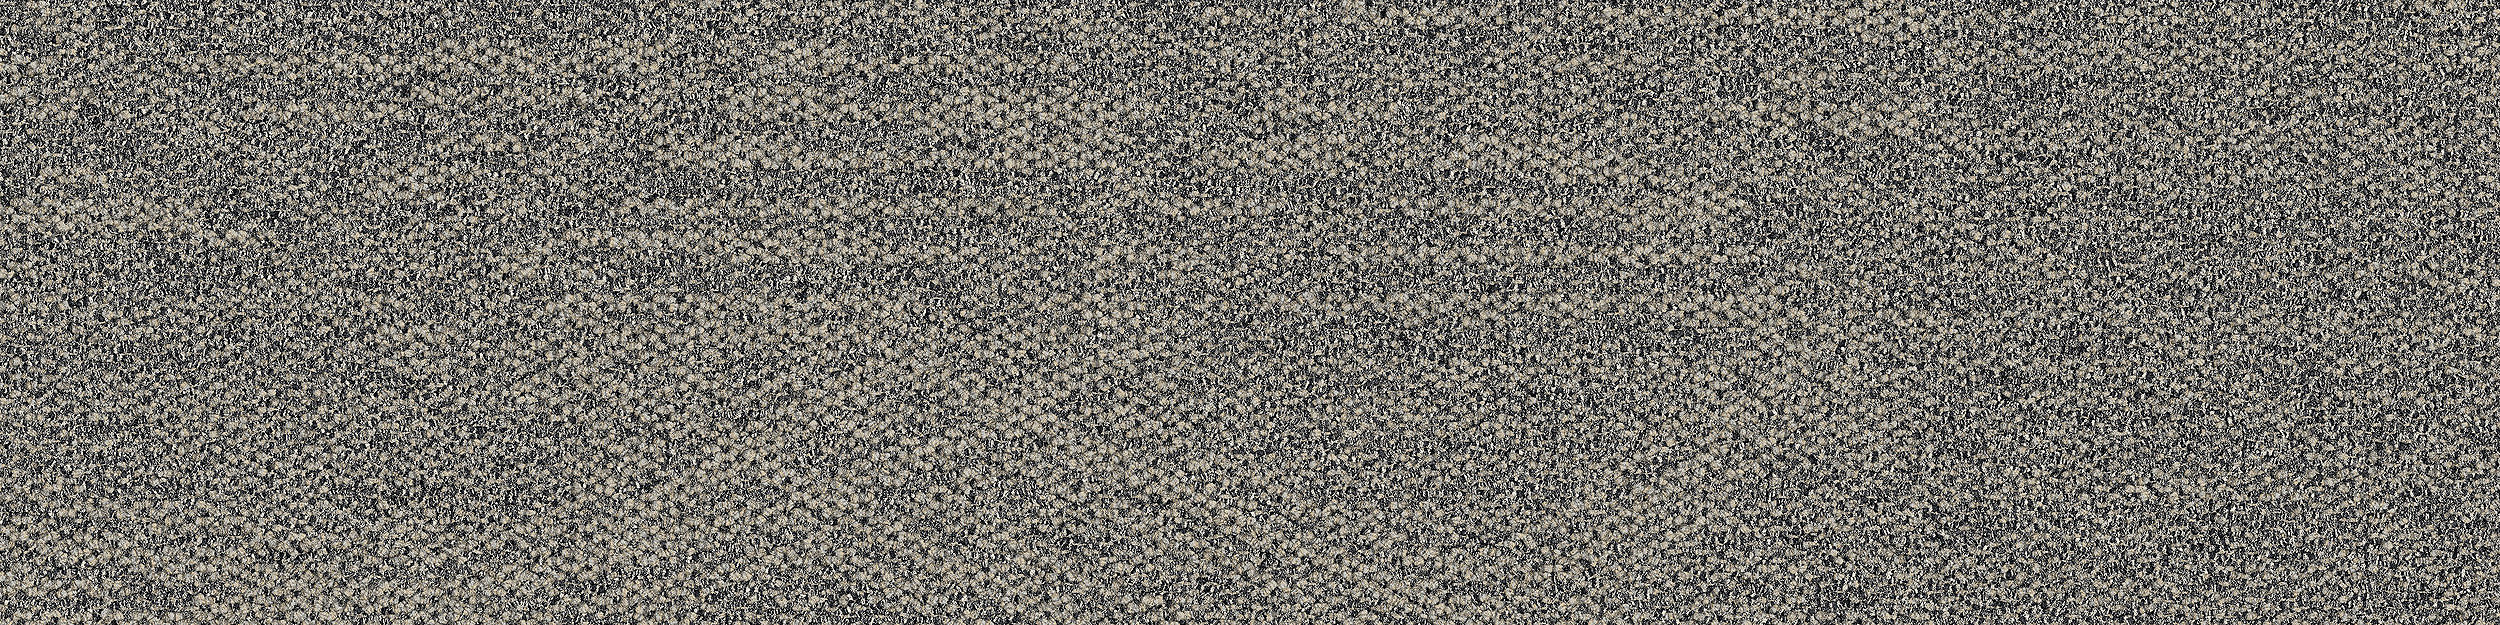 Open Air 409 Carpet Tile In Natural image number 5